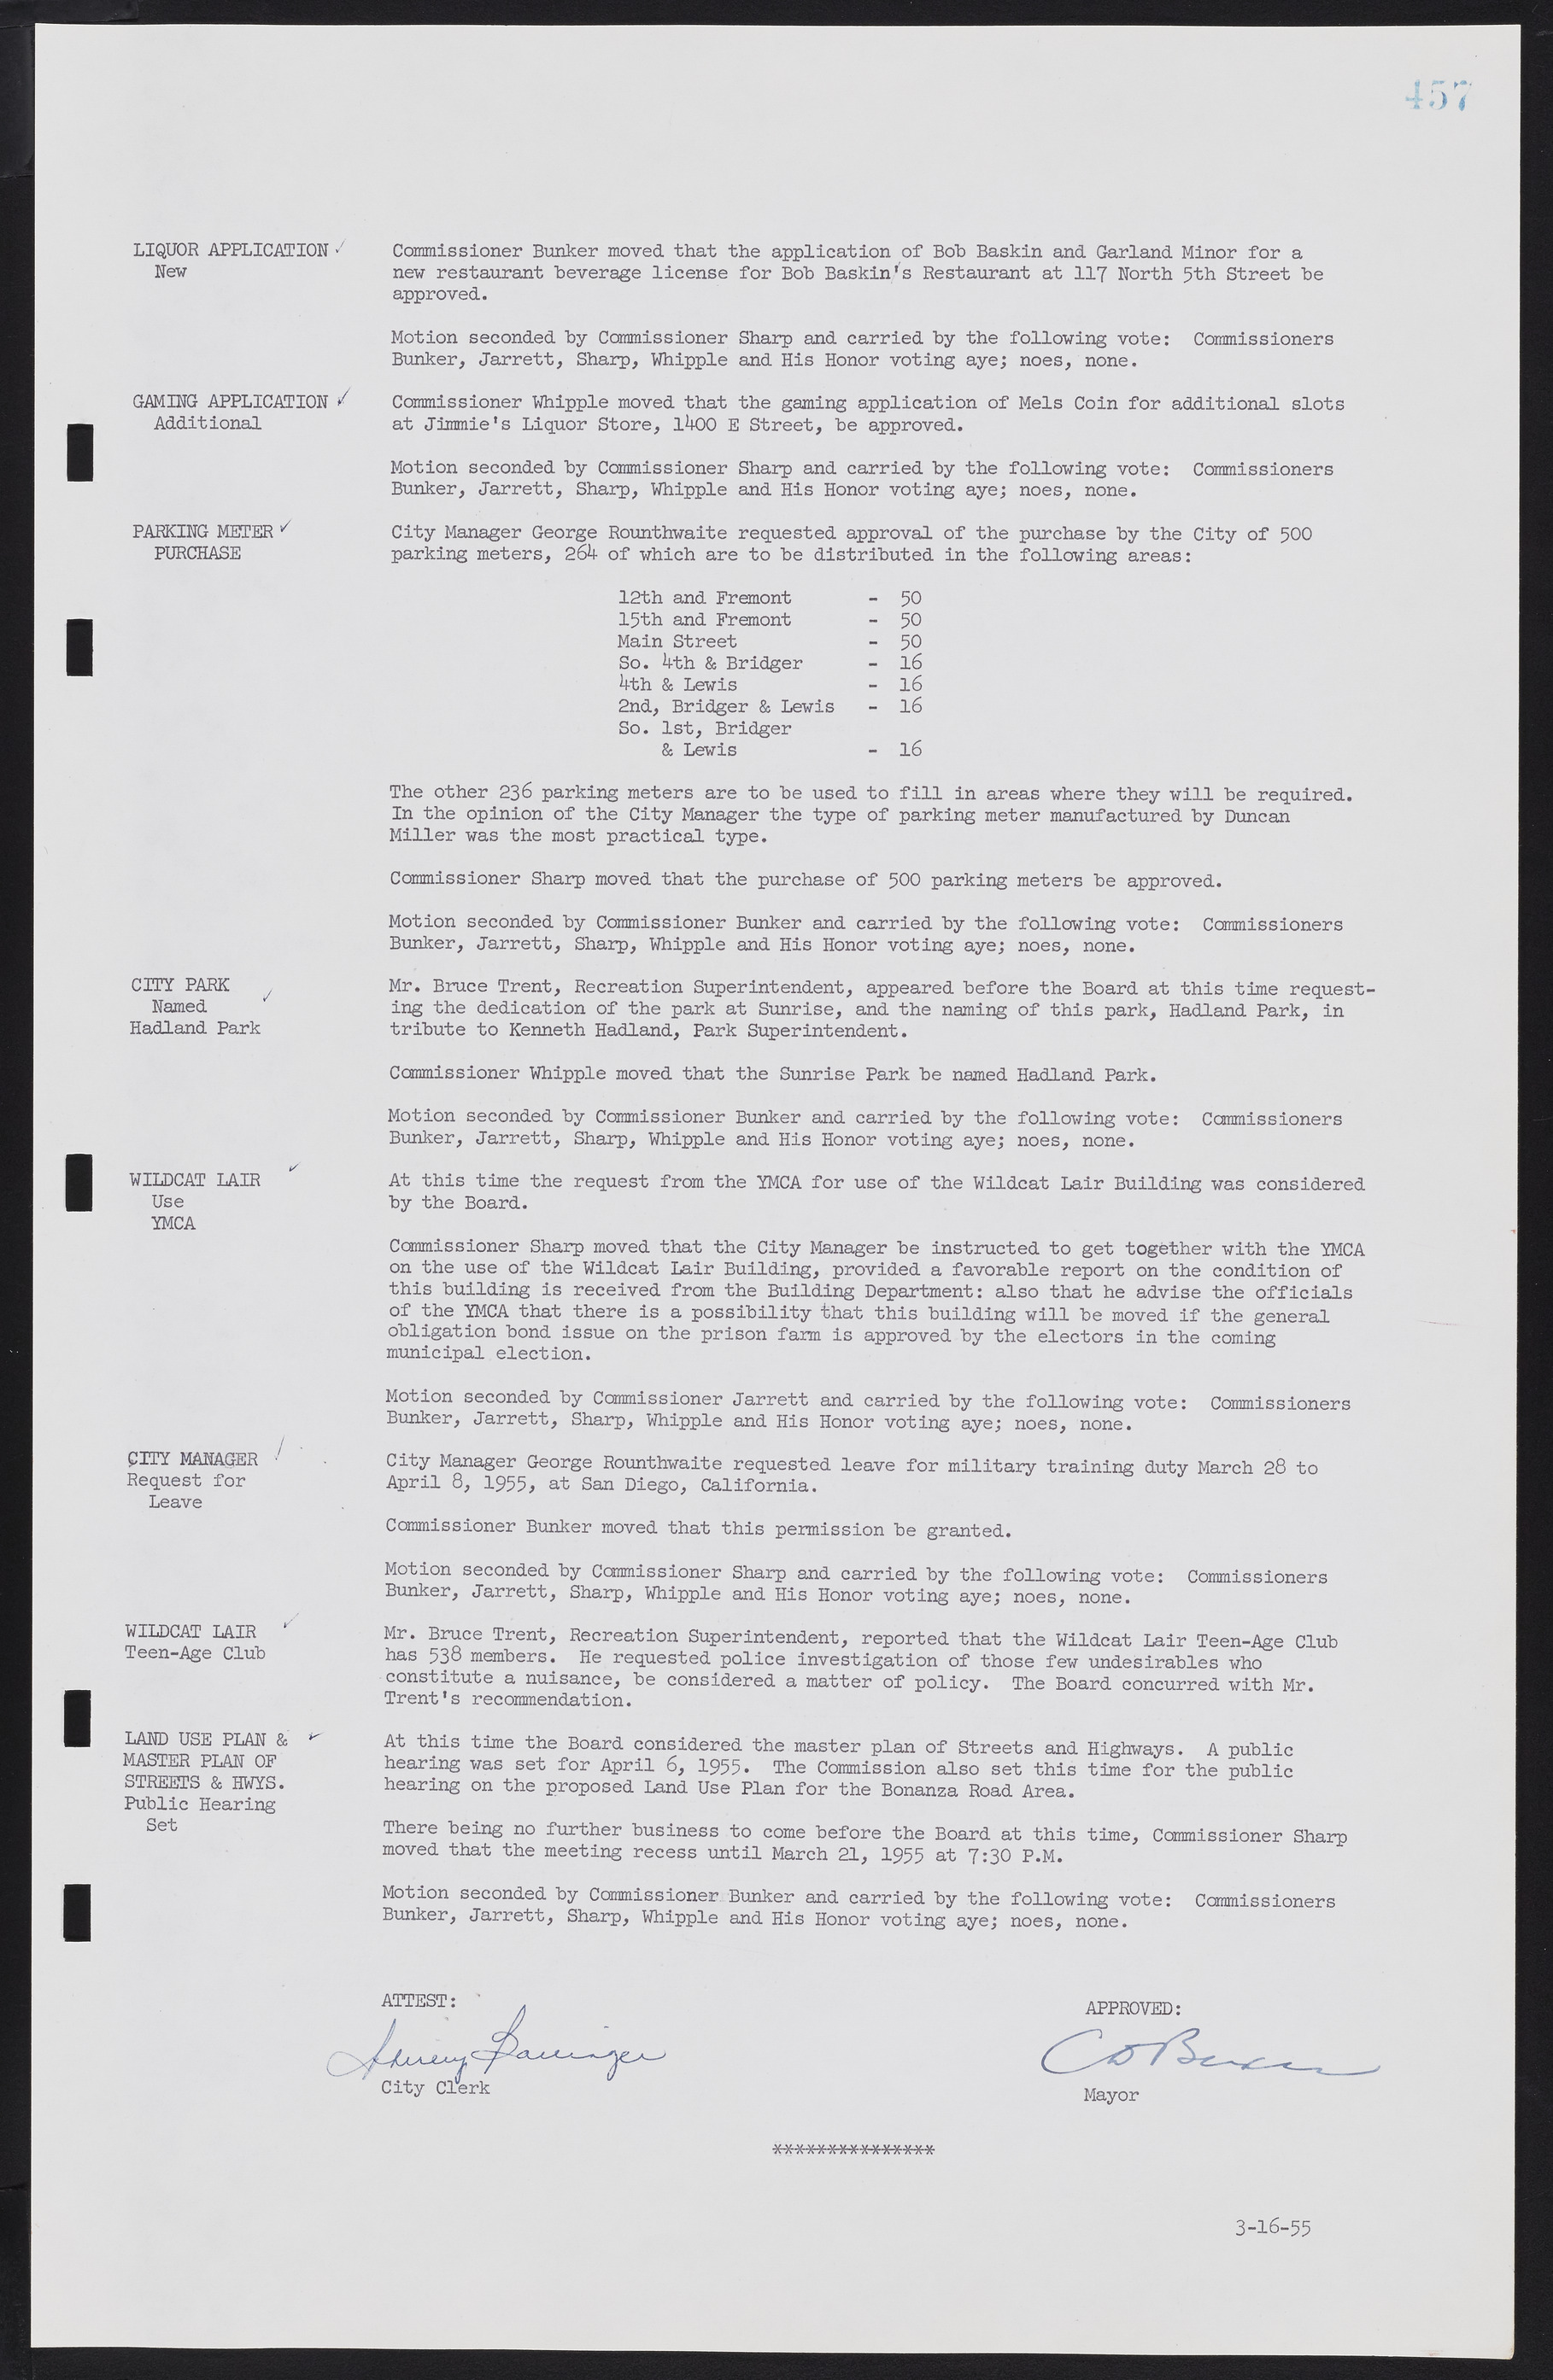 Las Vegas City Commission Minutes, February 17, 1954 to September 21, 1955, lvc000009-463